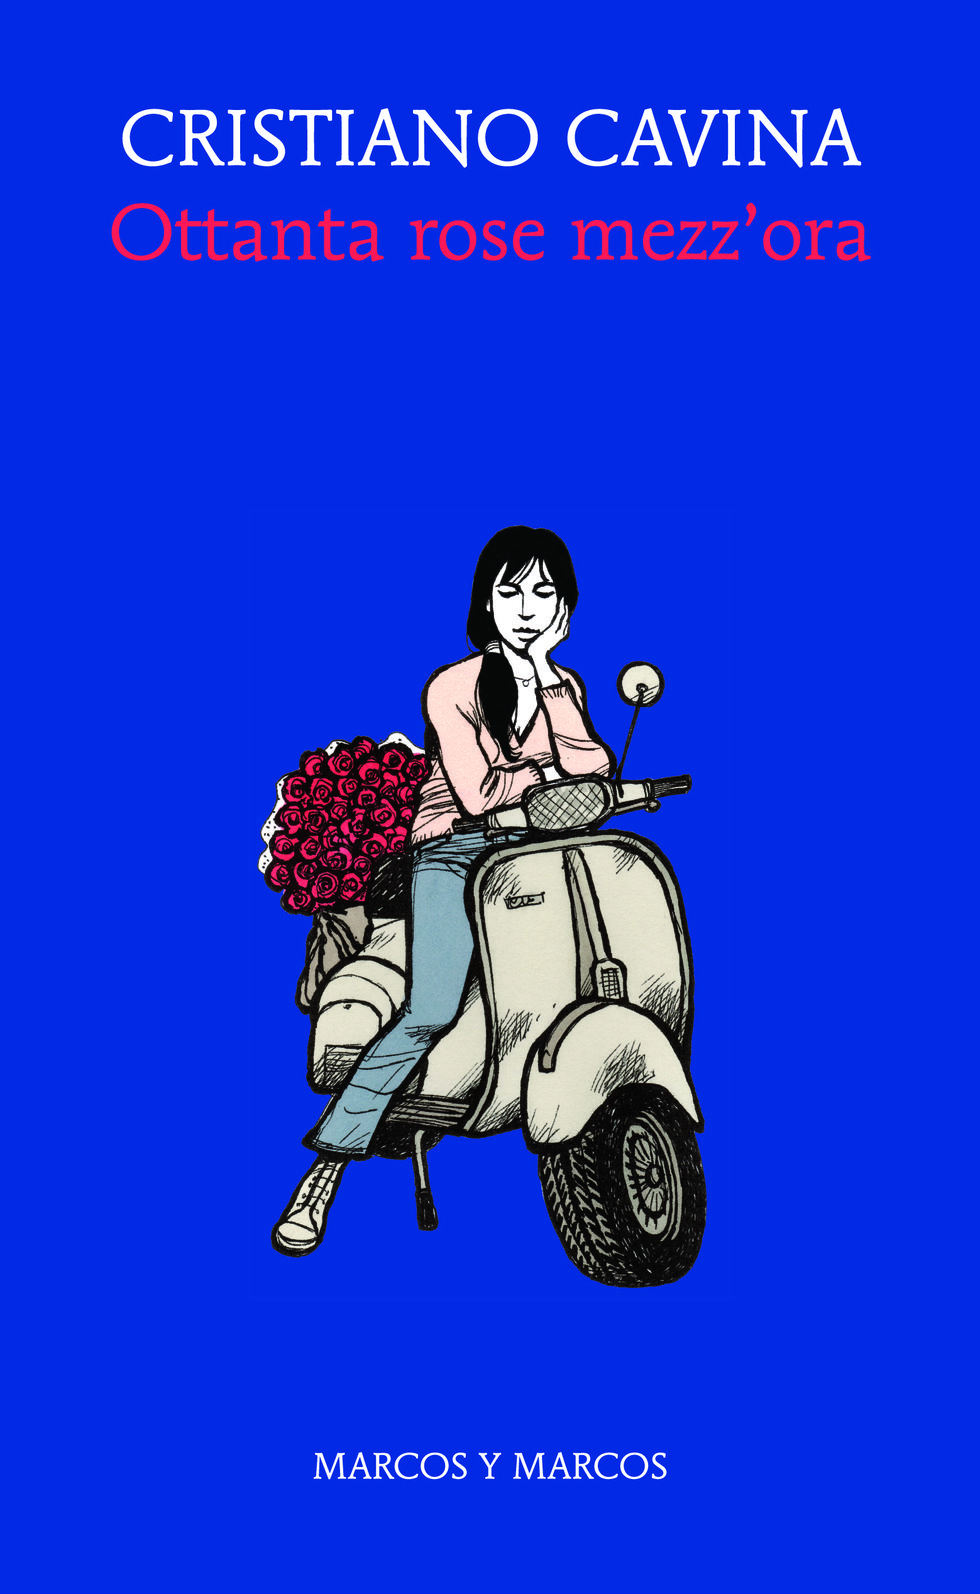 Motor vehicle, Cartoon, Vespa, Scooter, Vehicle, Illustration, 